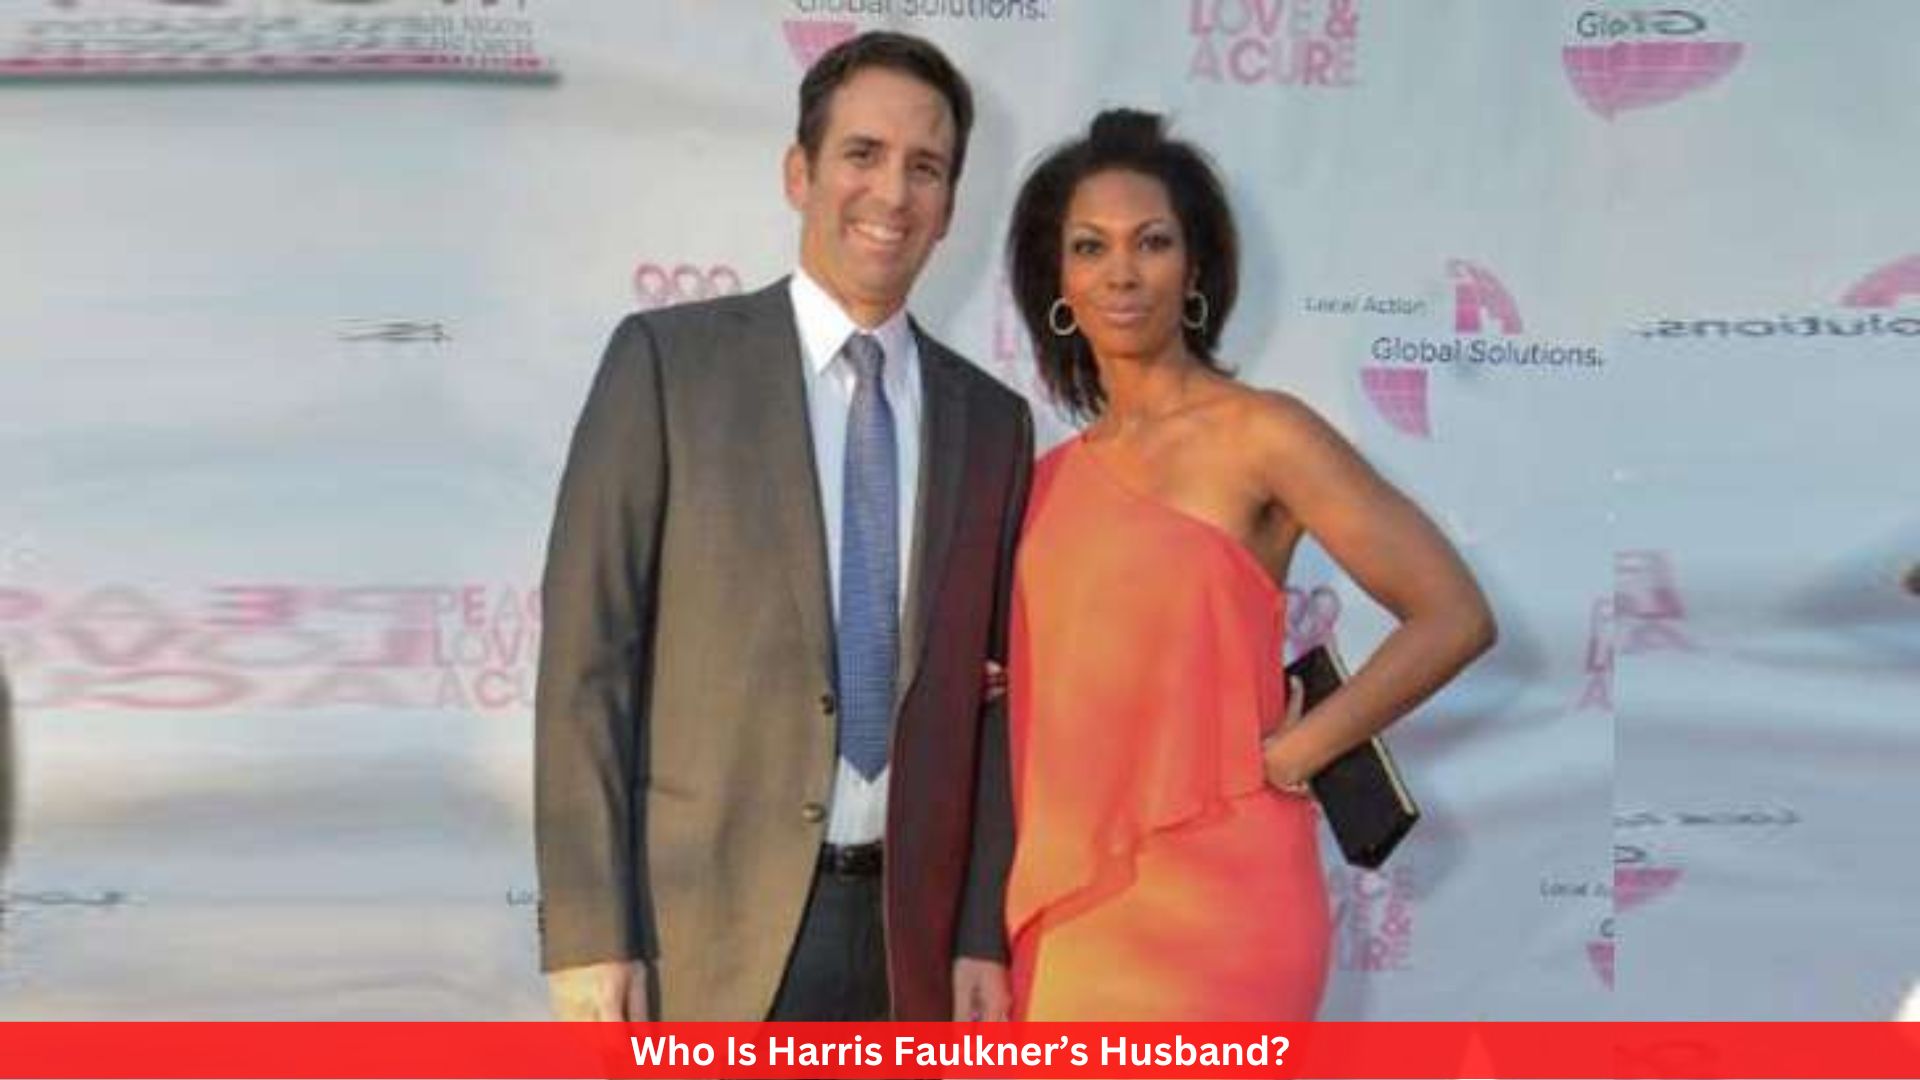 Who Is Harris Faulkner’s Husband?